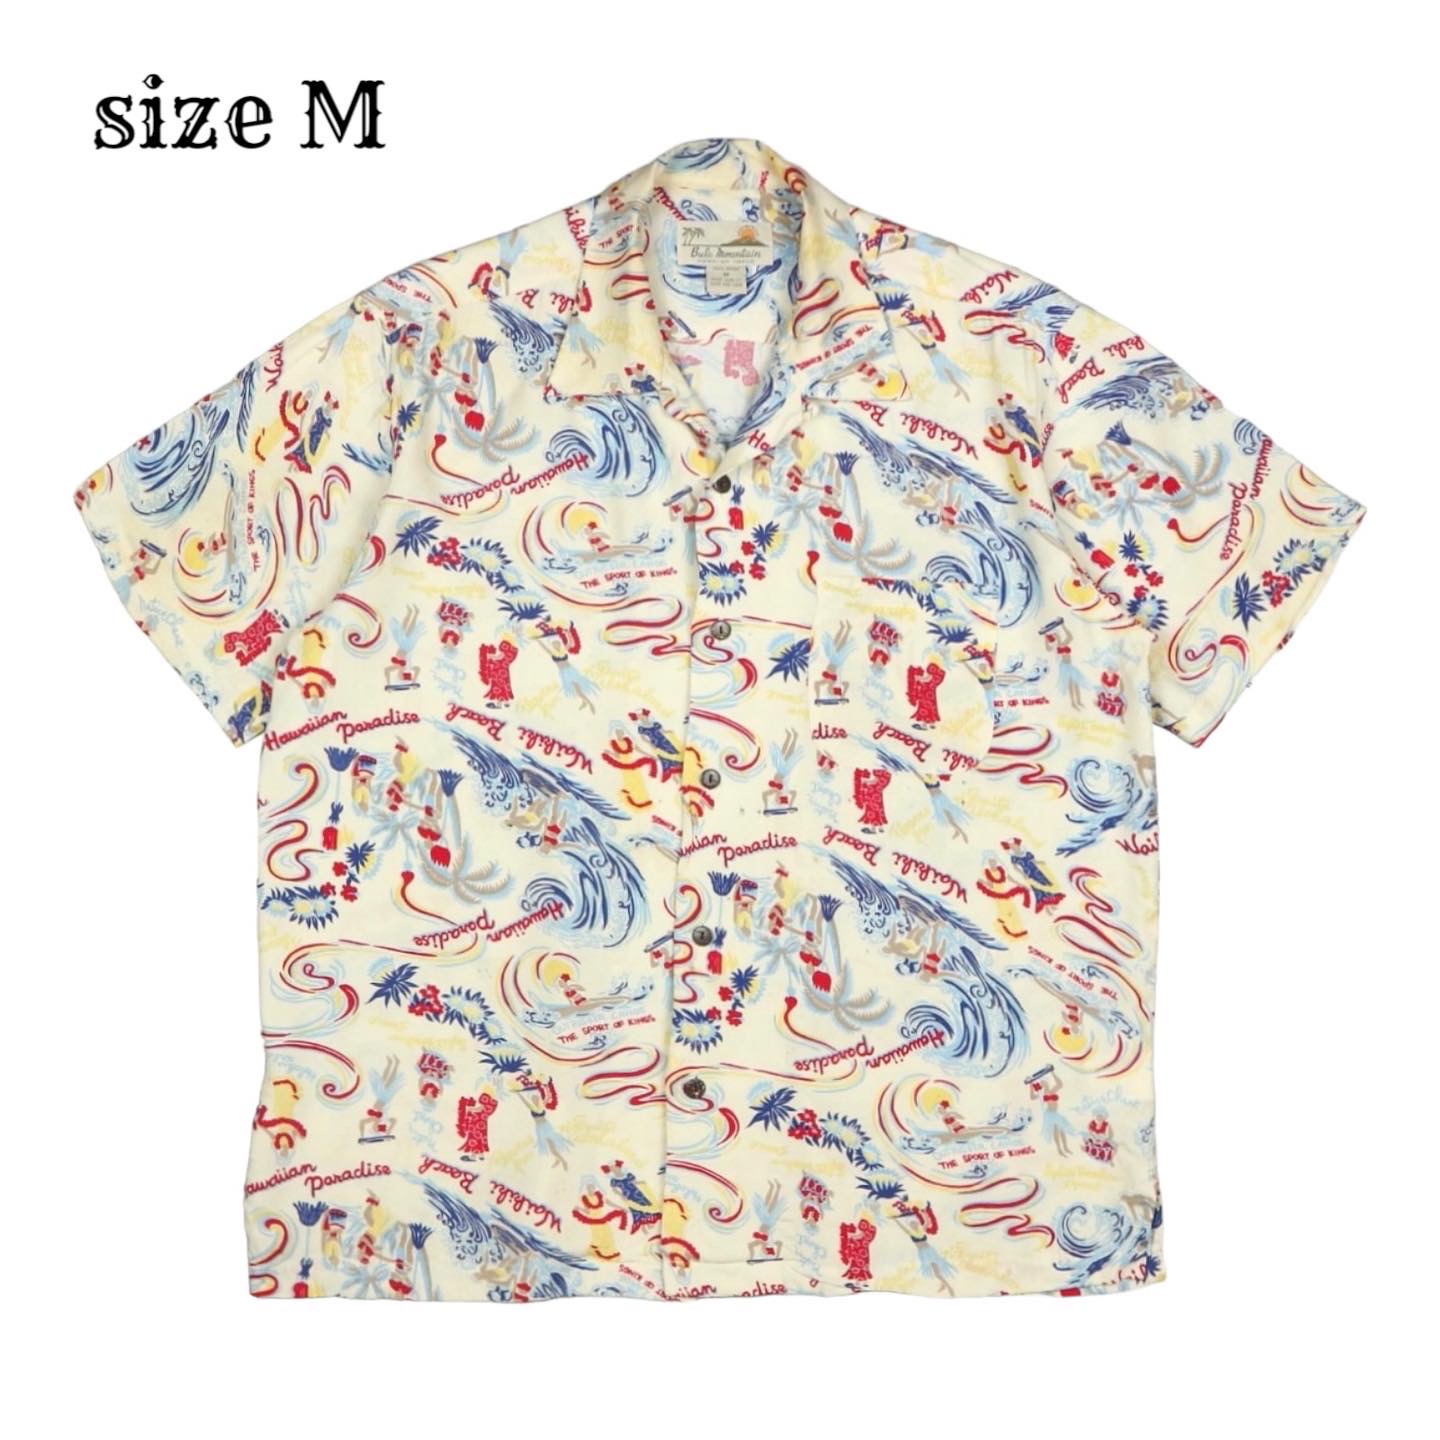 Bulc Mountain Hawaiian Shirt Size M